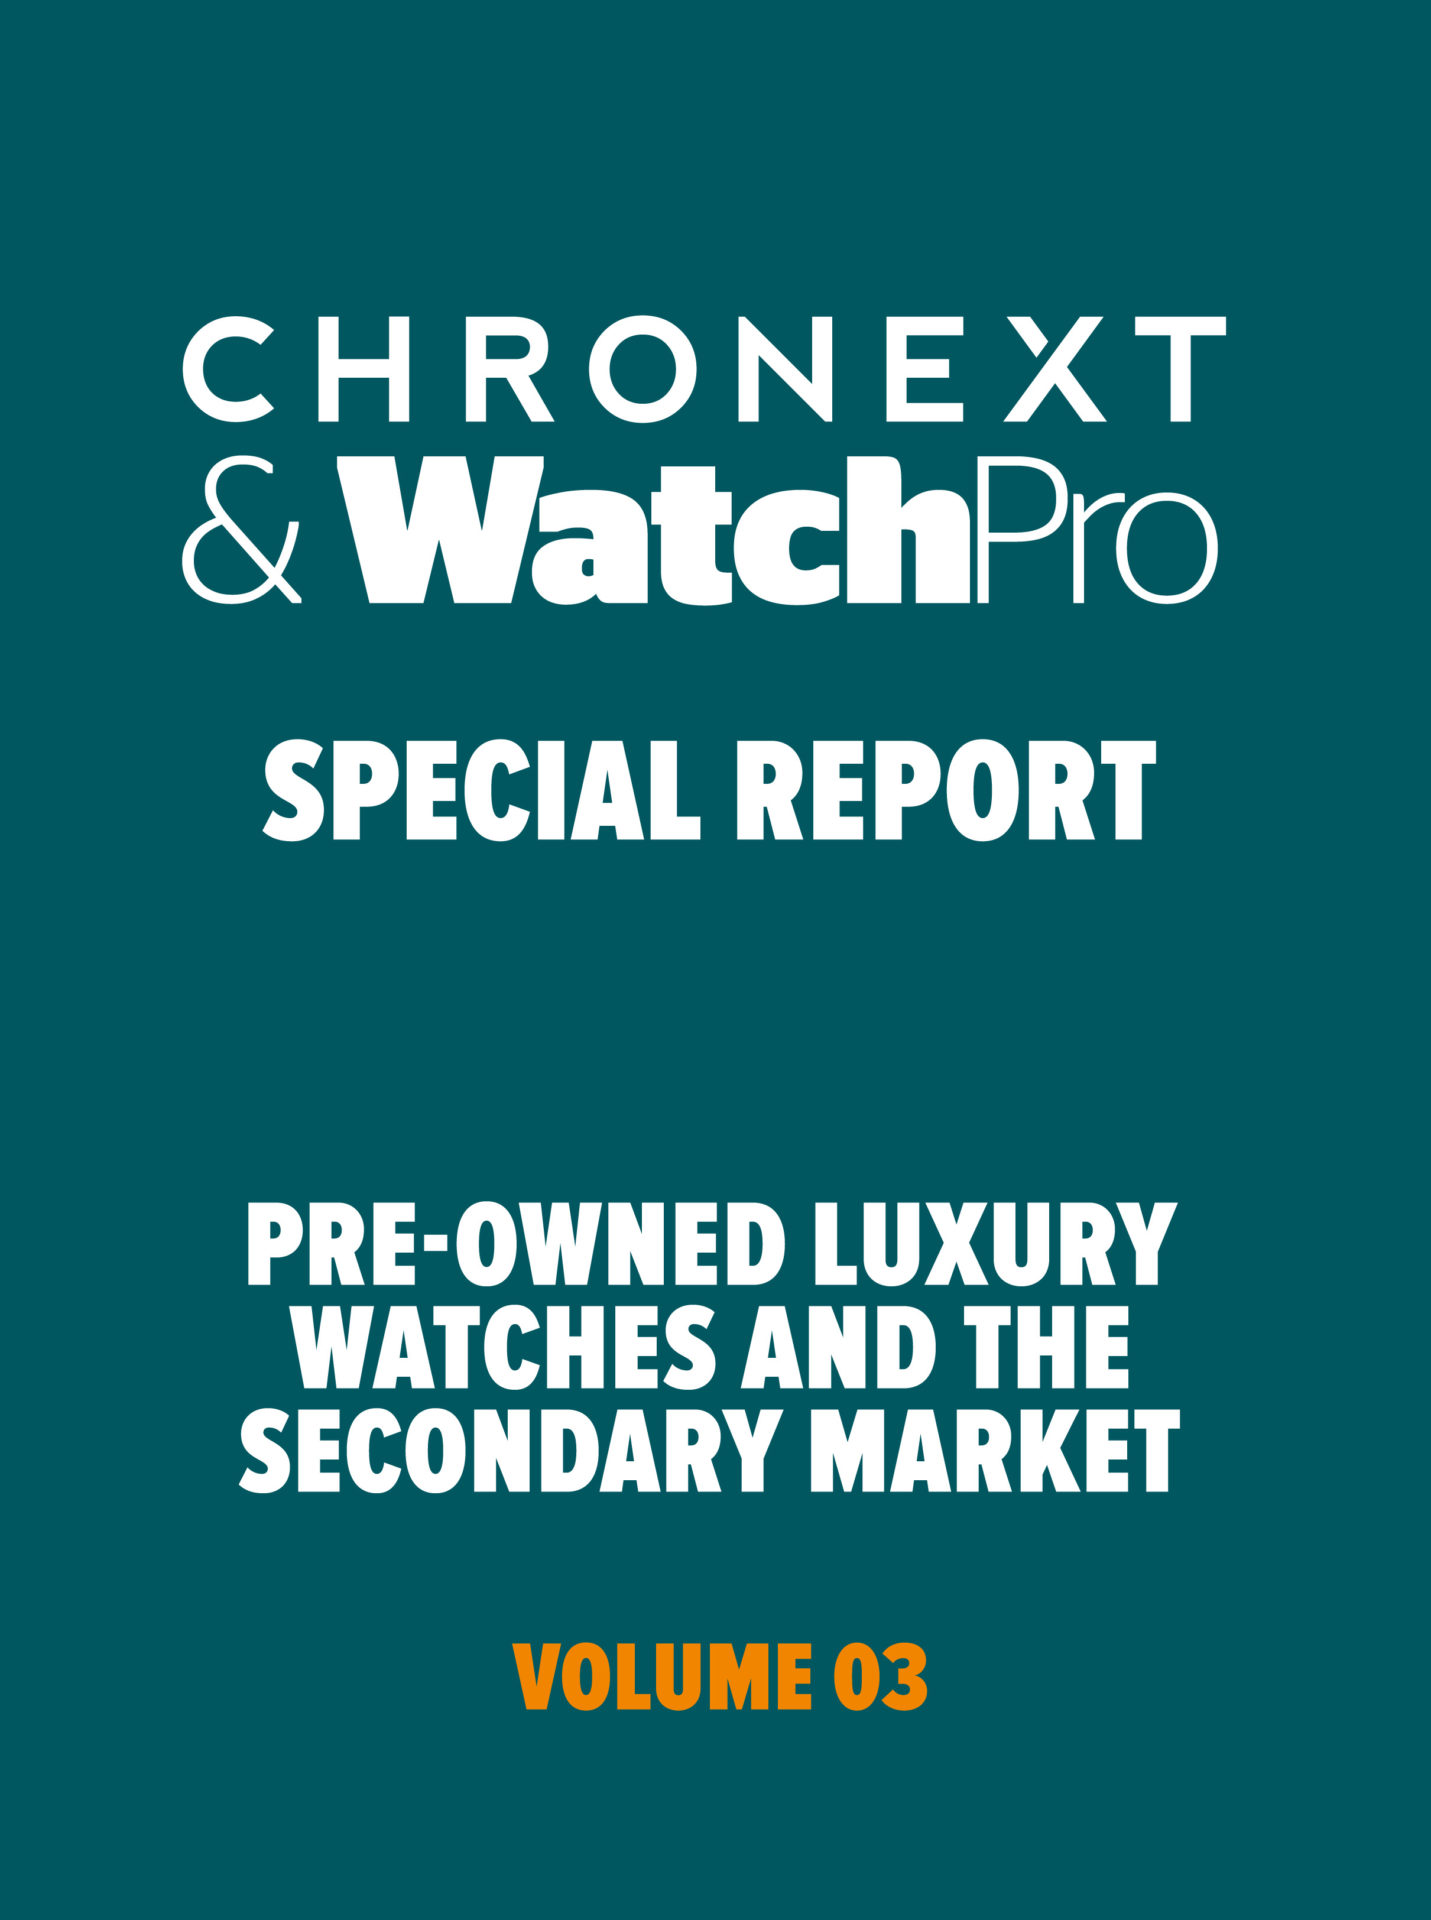 Chronext special report volume 3